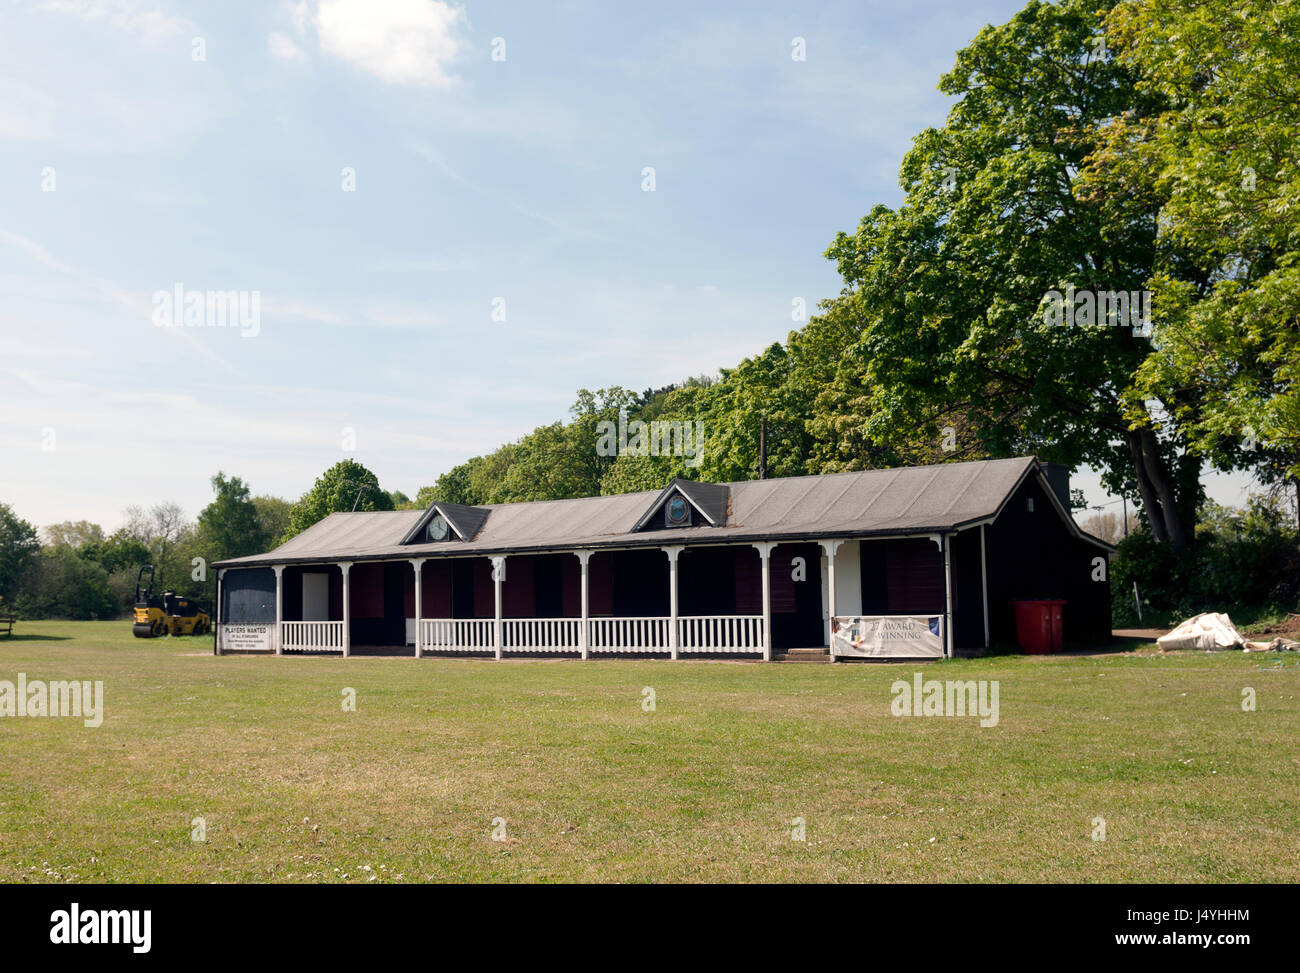 The cricket club pavilion, Marlow, Buckinghamshire, England, UK Stock Photo